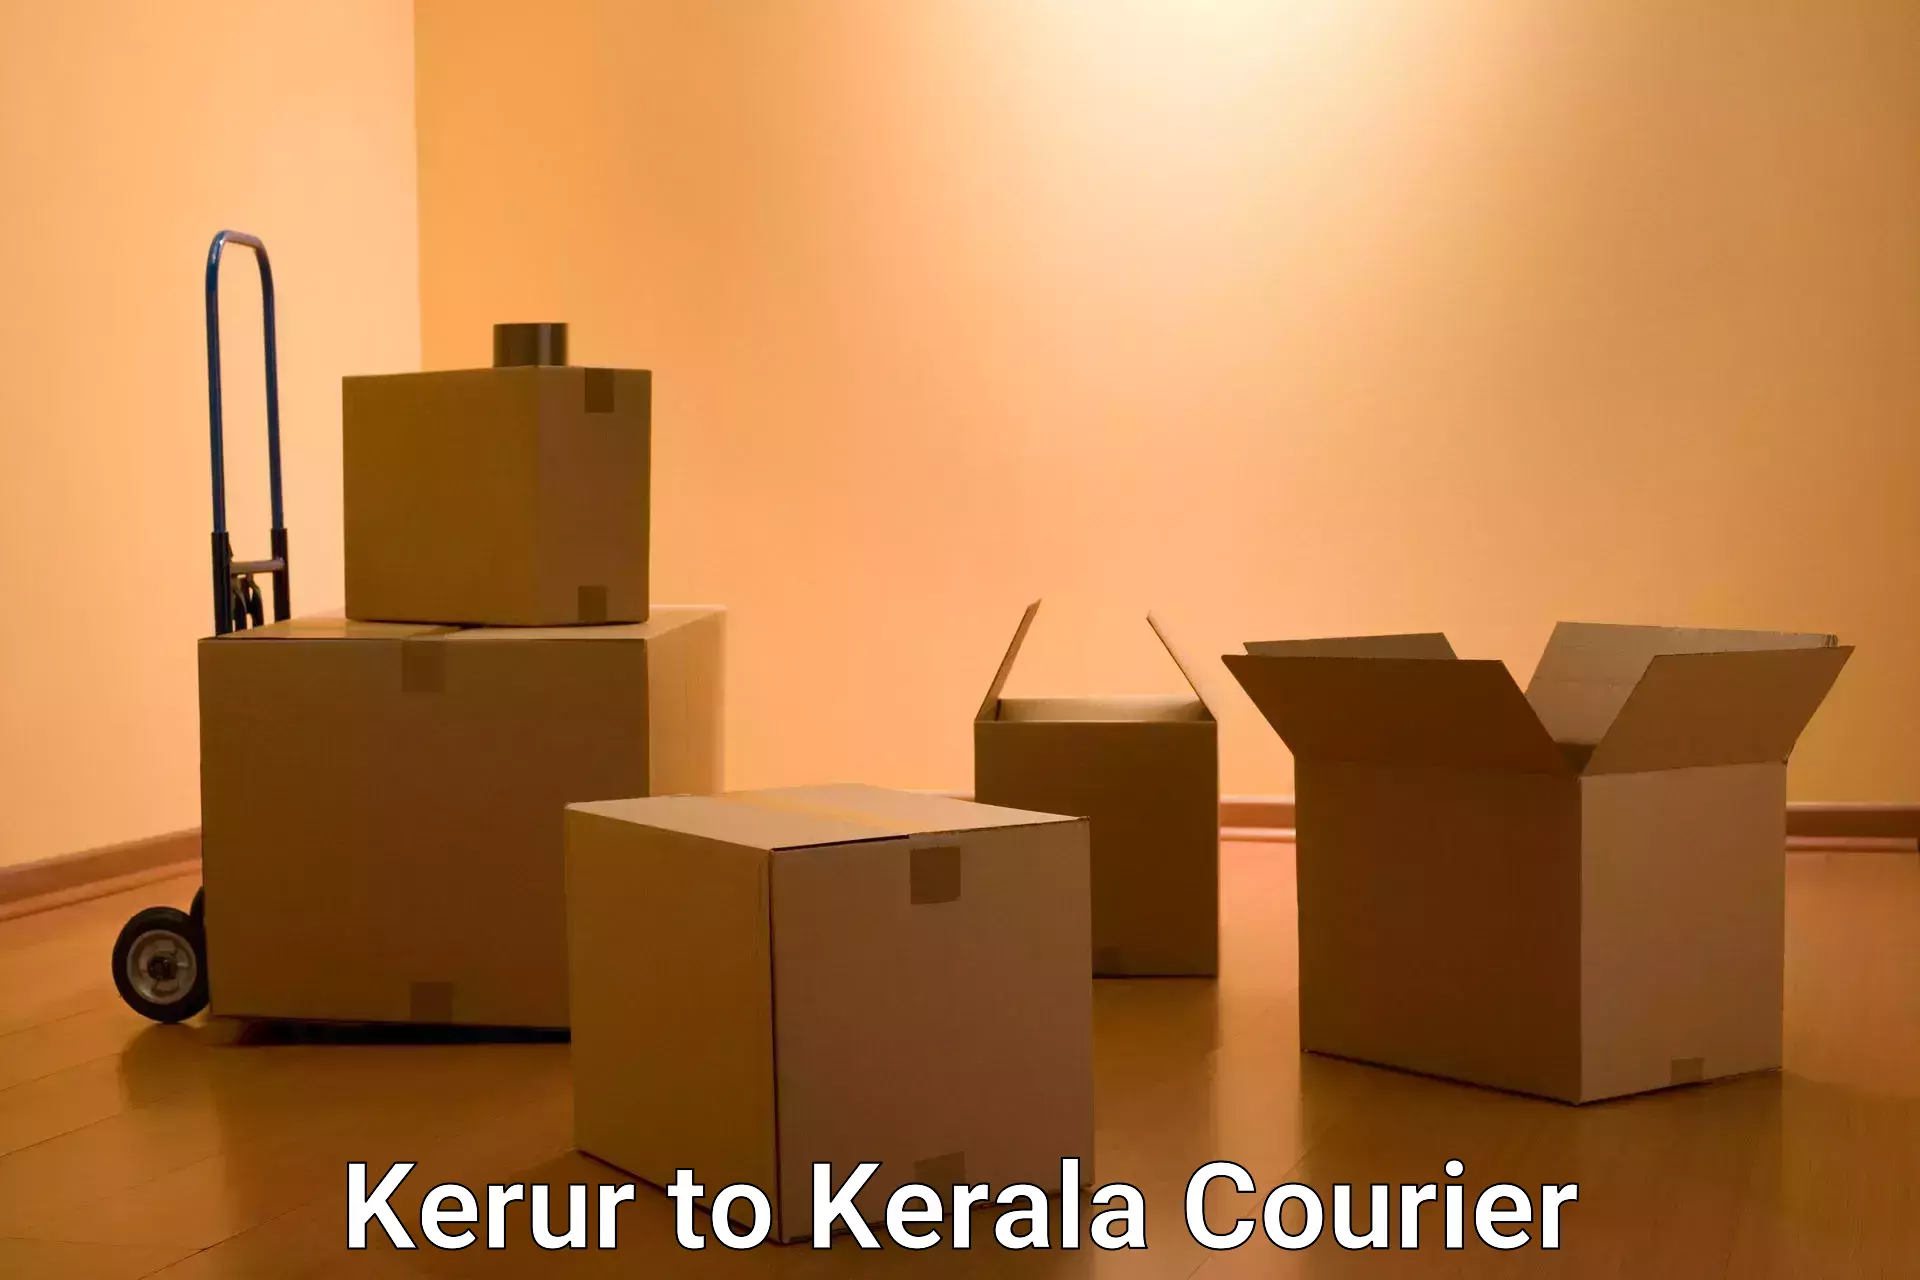 Efficient parcel tracking Kerur to Kollam